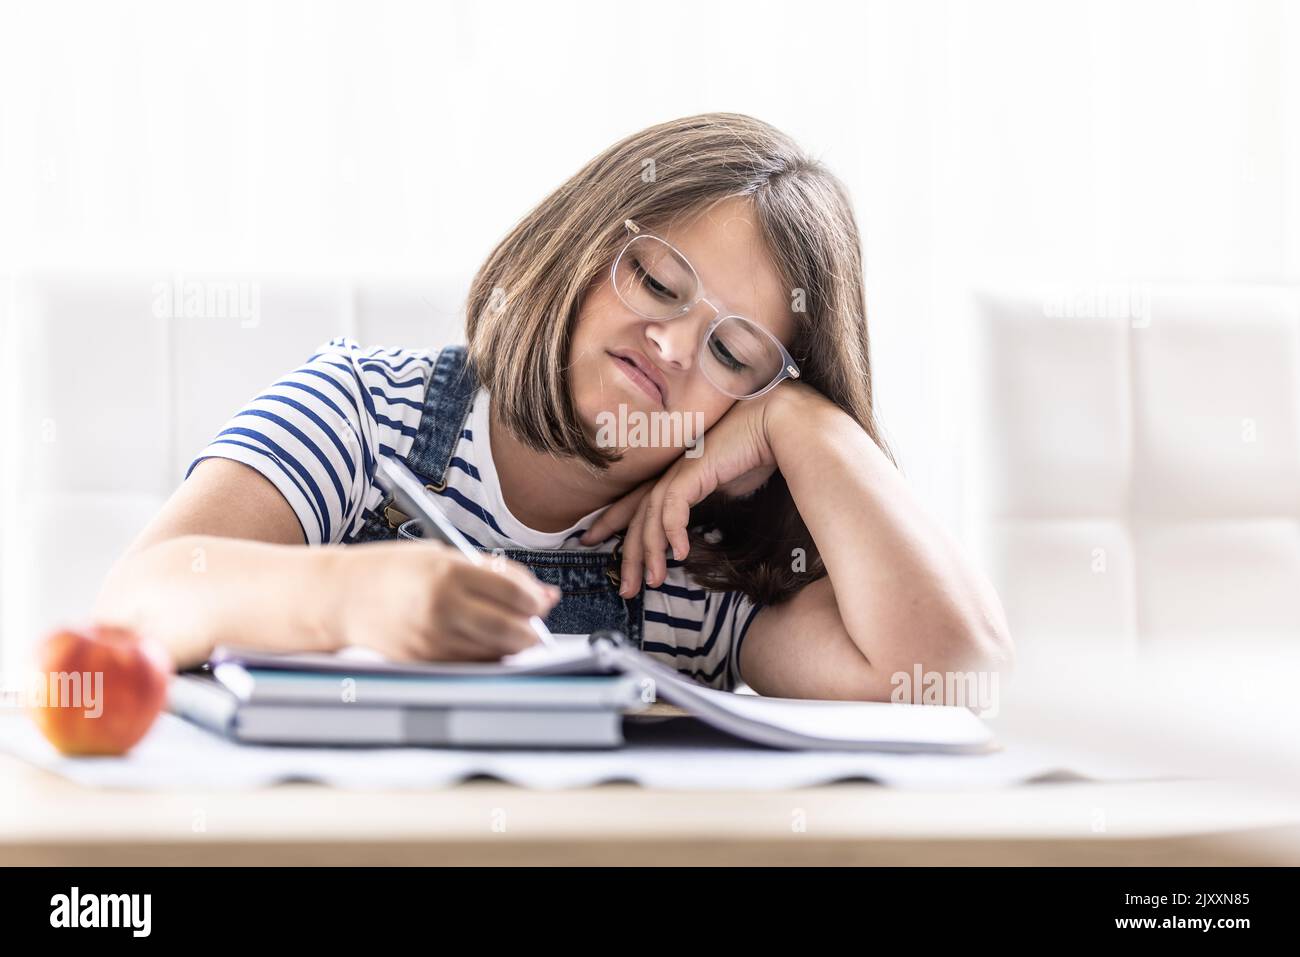 Annoyed schoolgirl with eyewear writes homework leaning against her hand. Stock Photo